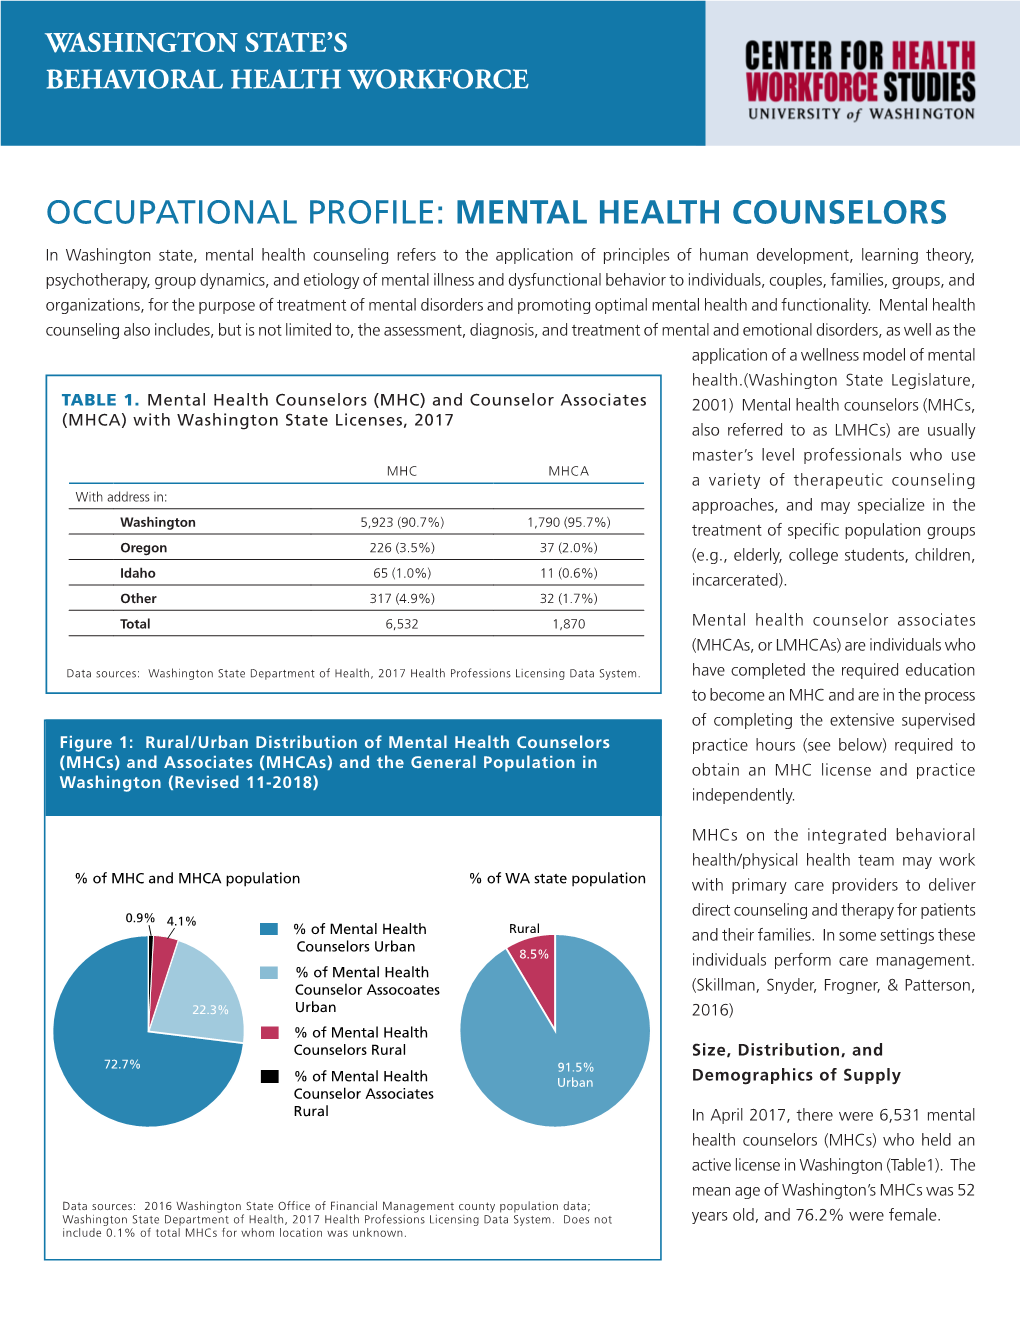 Mental Health Counselors